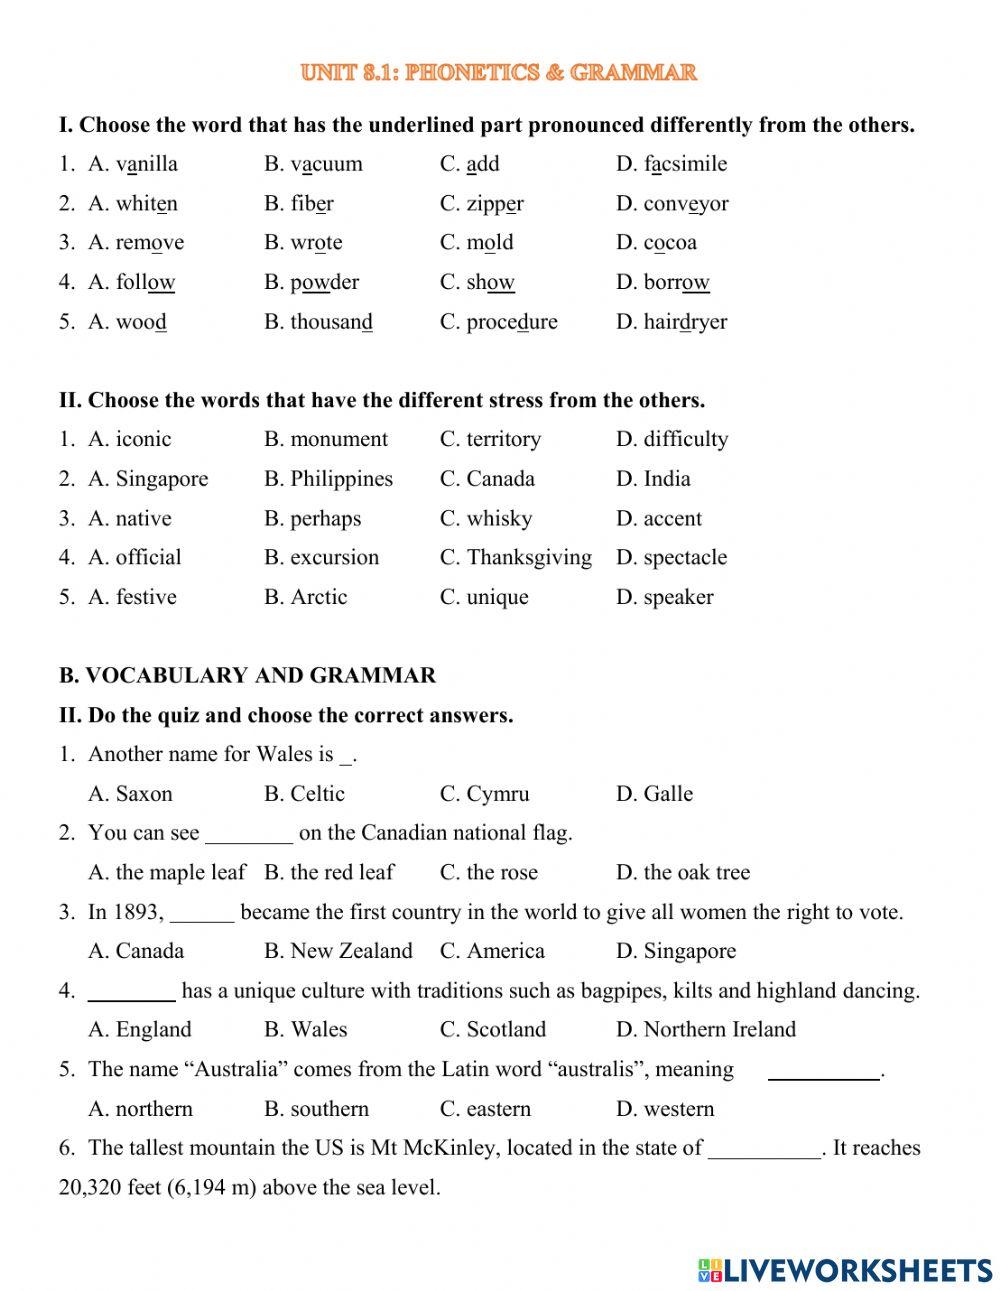 Y8 Unit 8.1 - Phonetics&Grammar